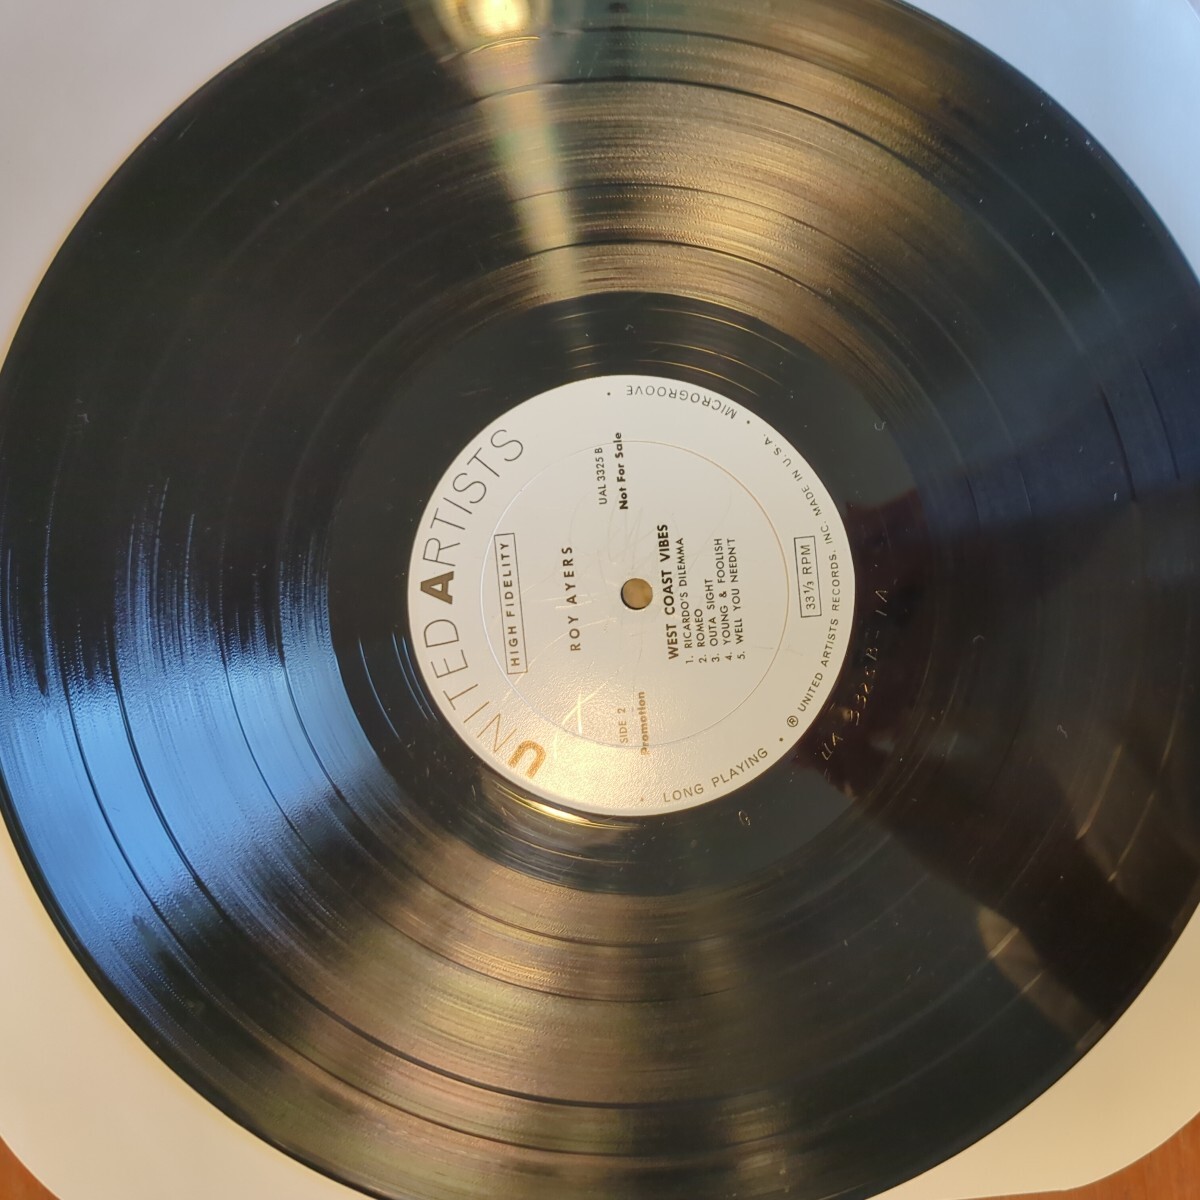 PROMO US original MONO sample 見本盤 roy ayers west coast vibes analog record レコード LP アナログ vinylの画像7